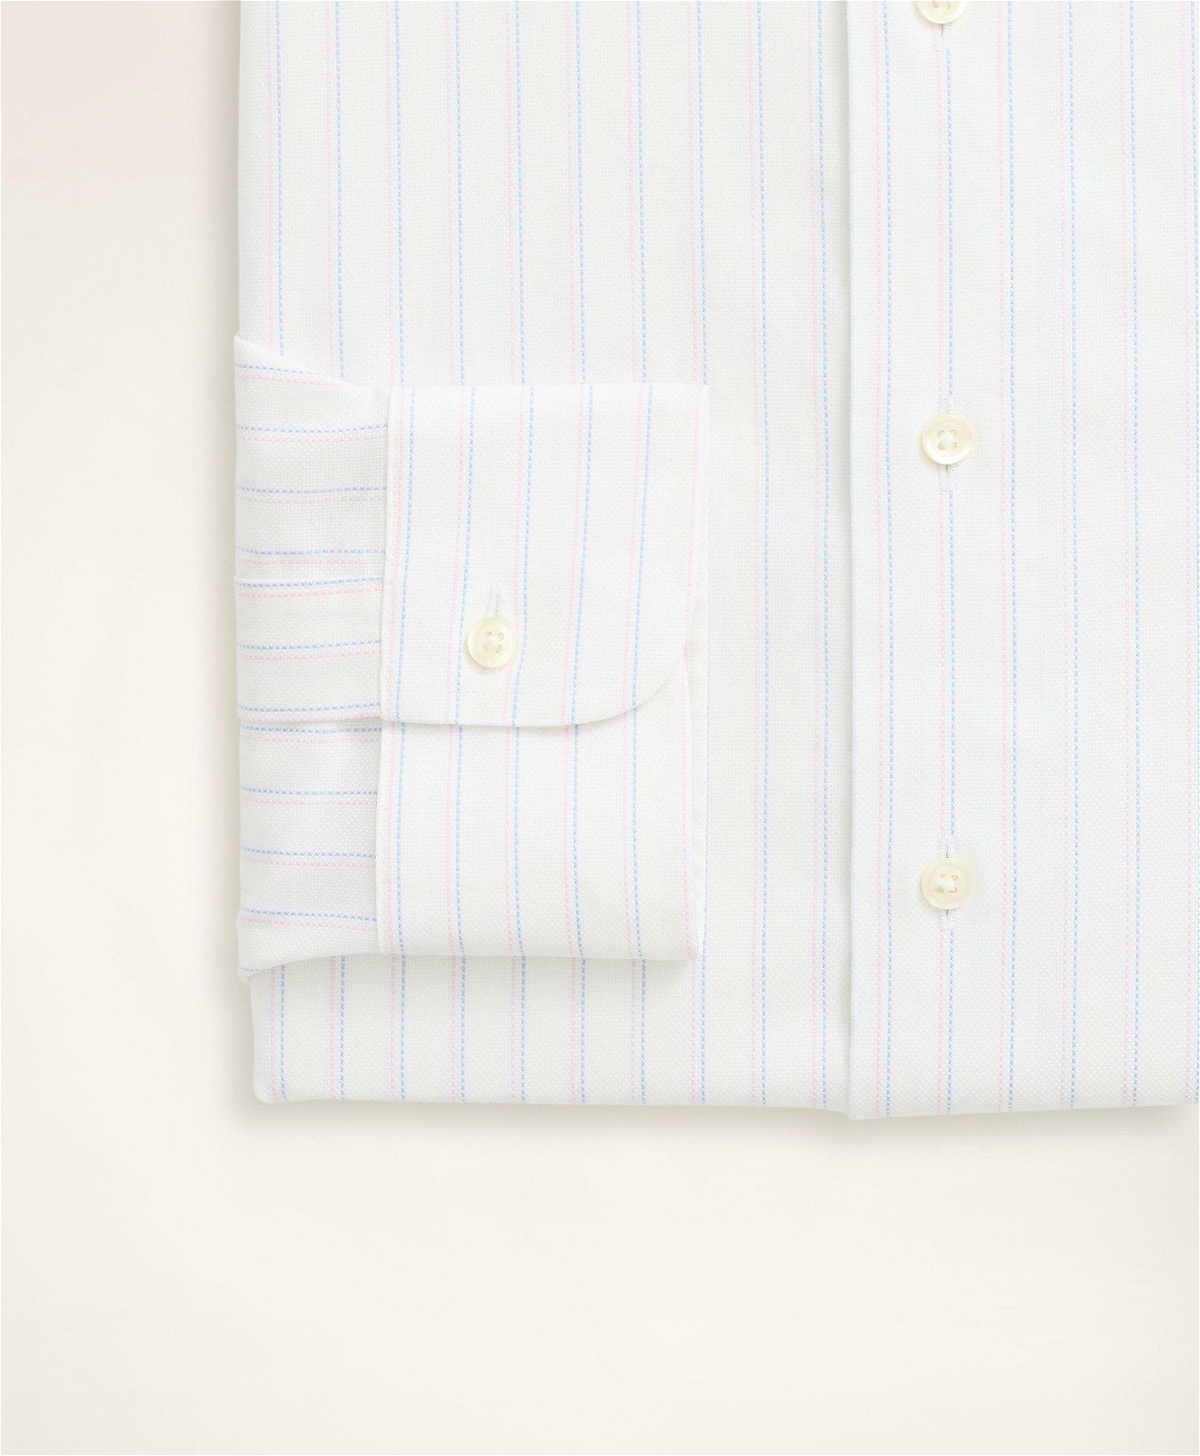 Brooks Brothers Men's Stretch Milano Slim-Fit Dress Shirt, Non-Iron Royal Oxford Ainsley Collar Pinstripe | White